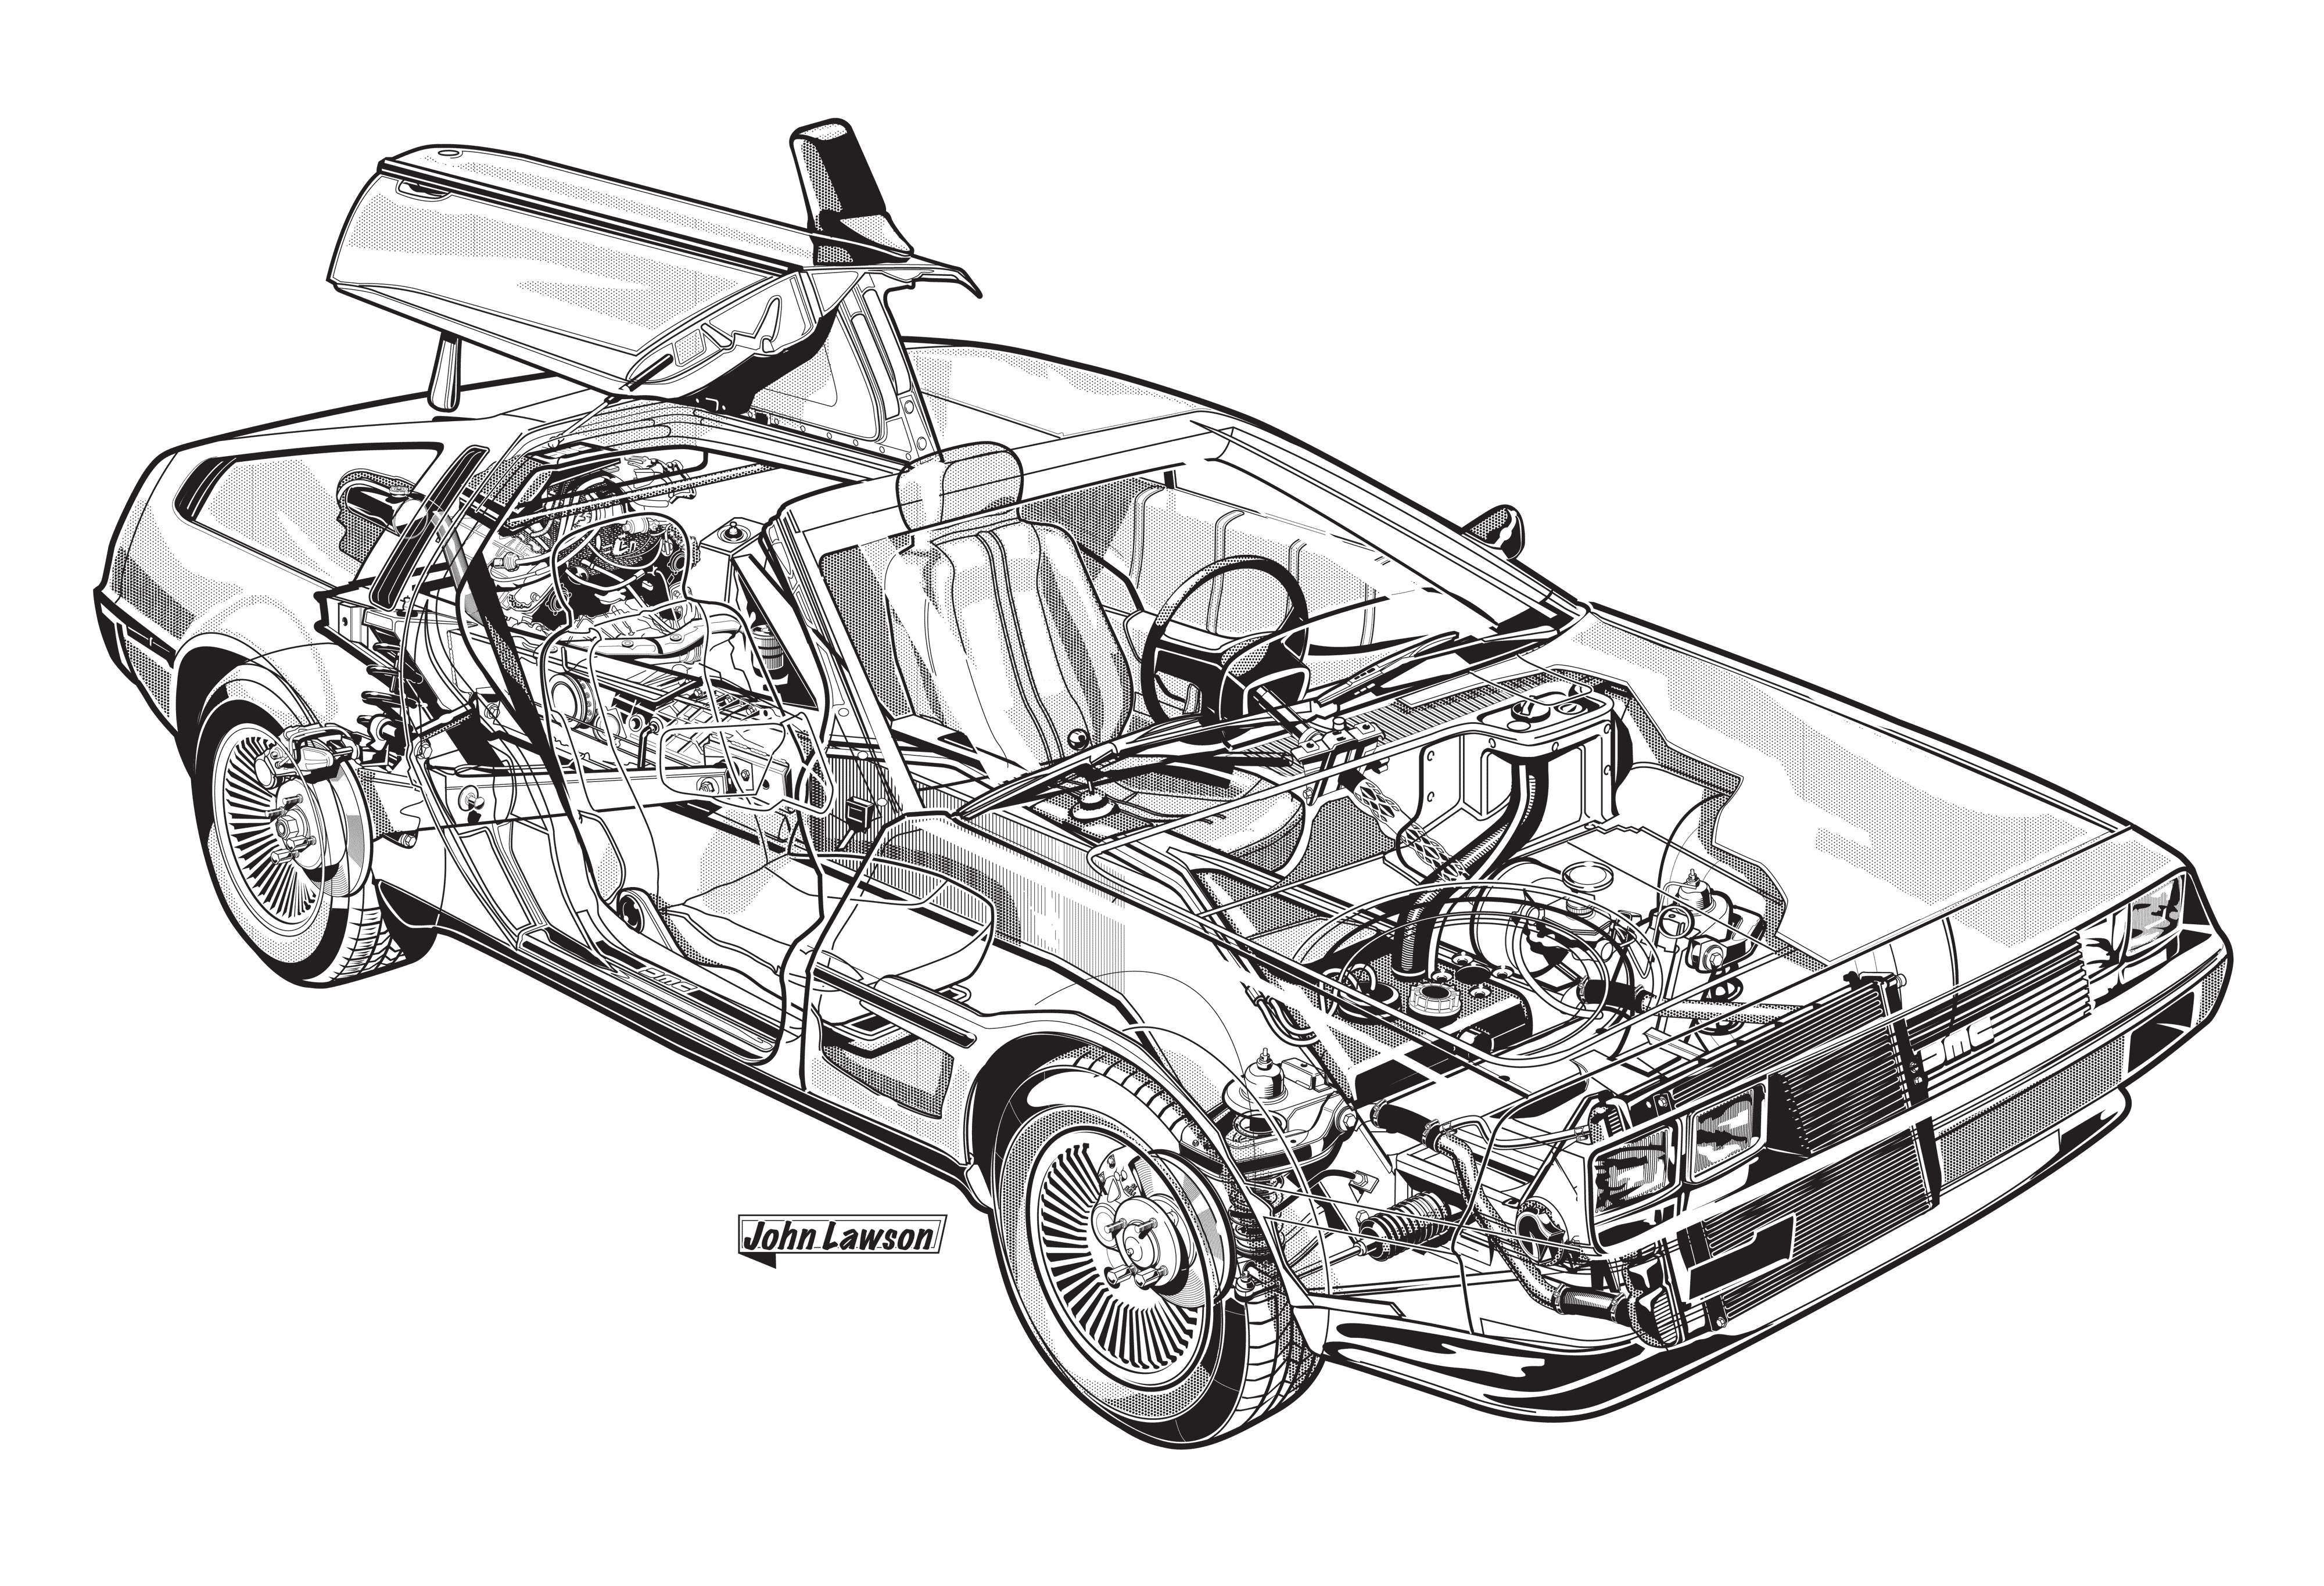 DeLorean DMC-12 cutaway drawing